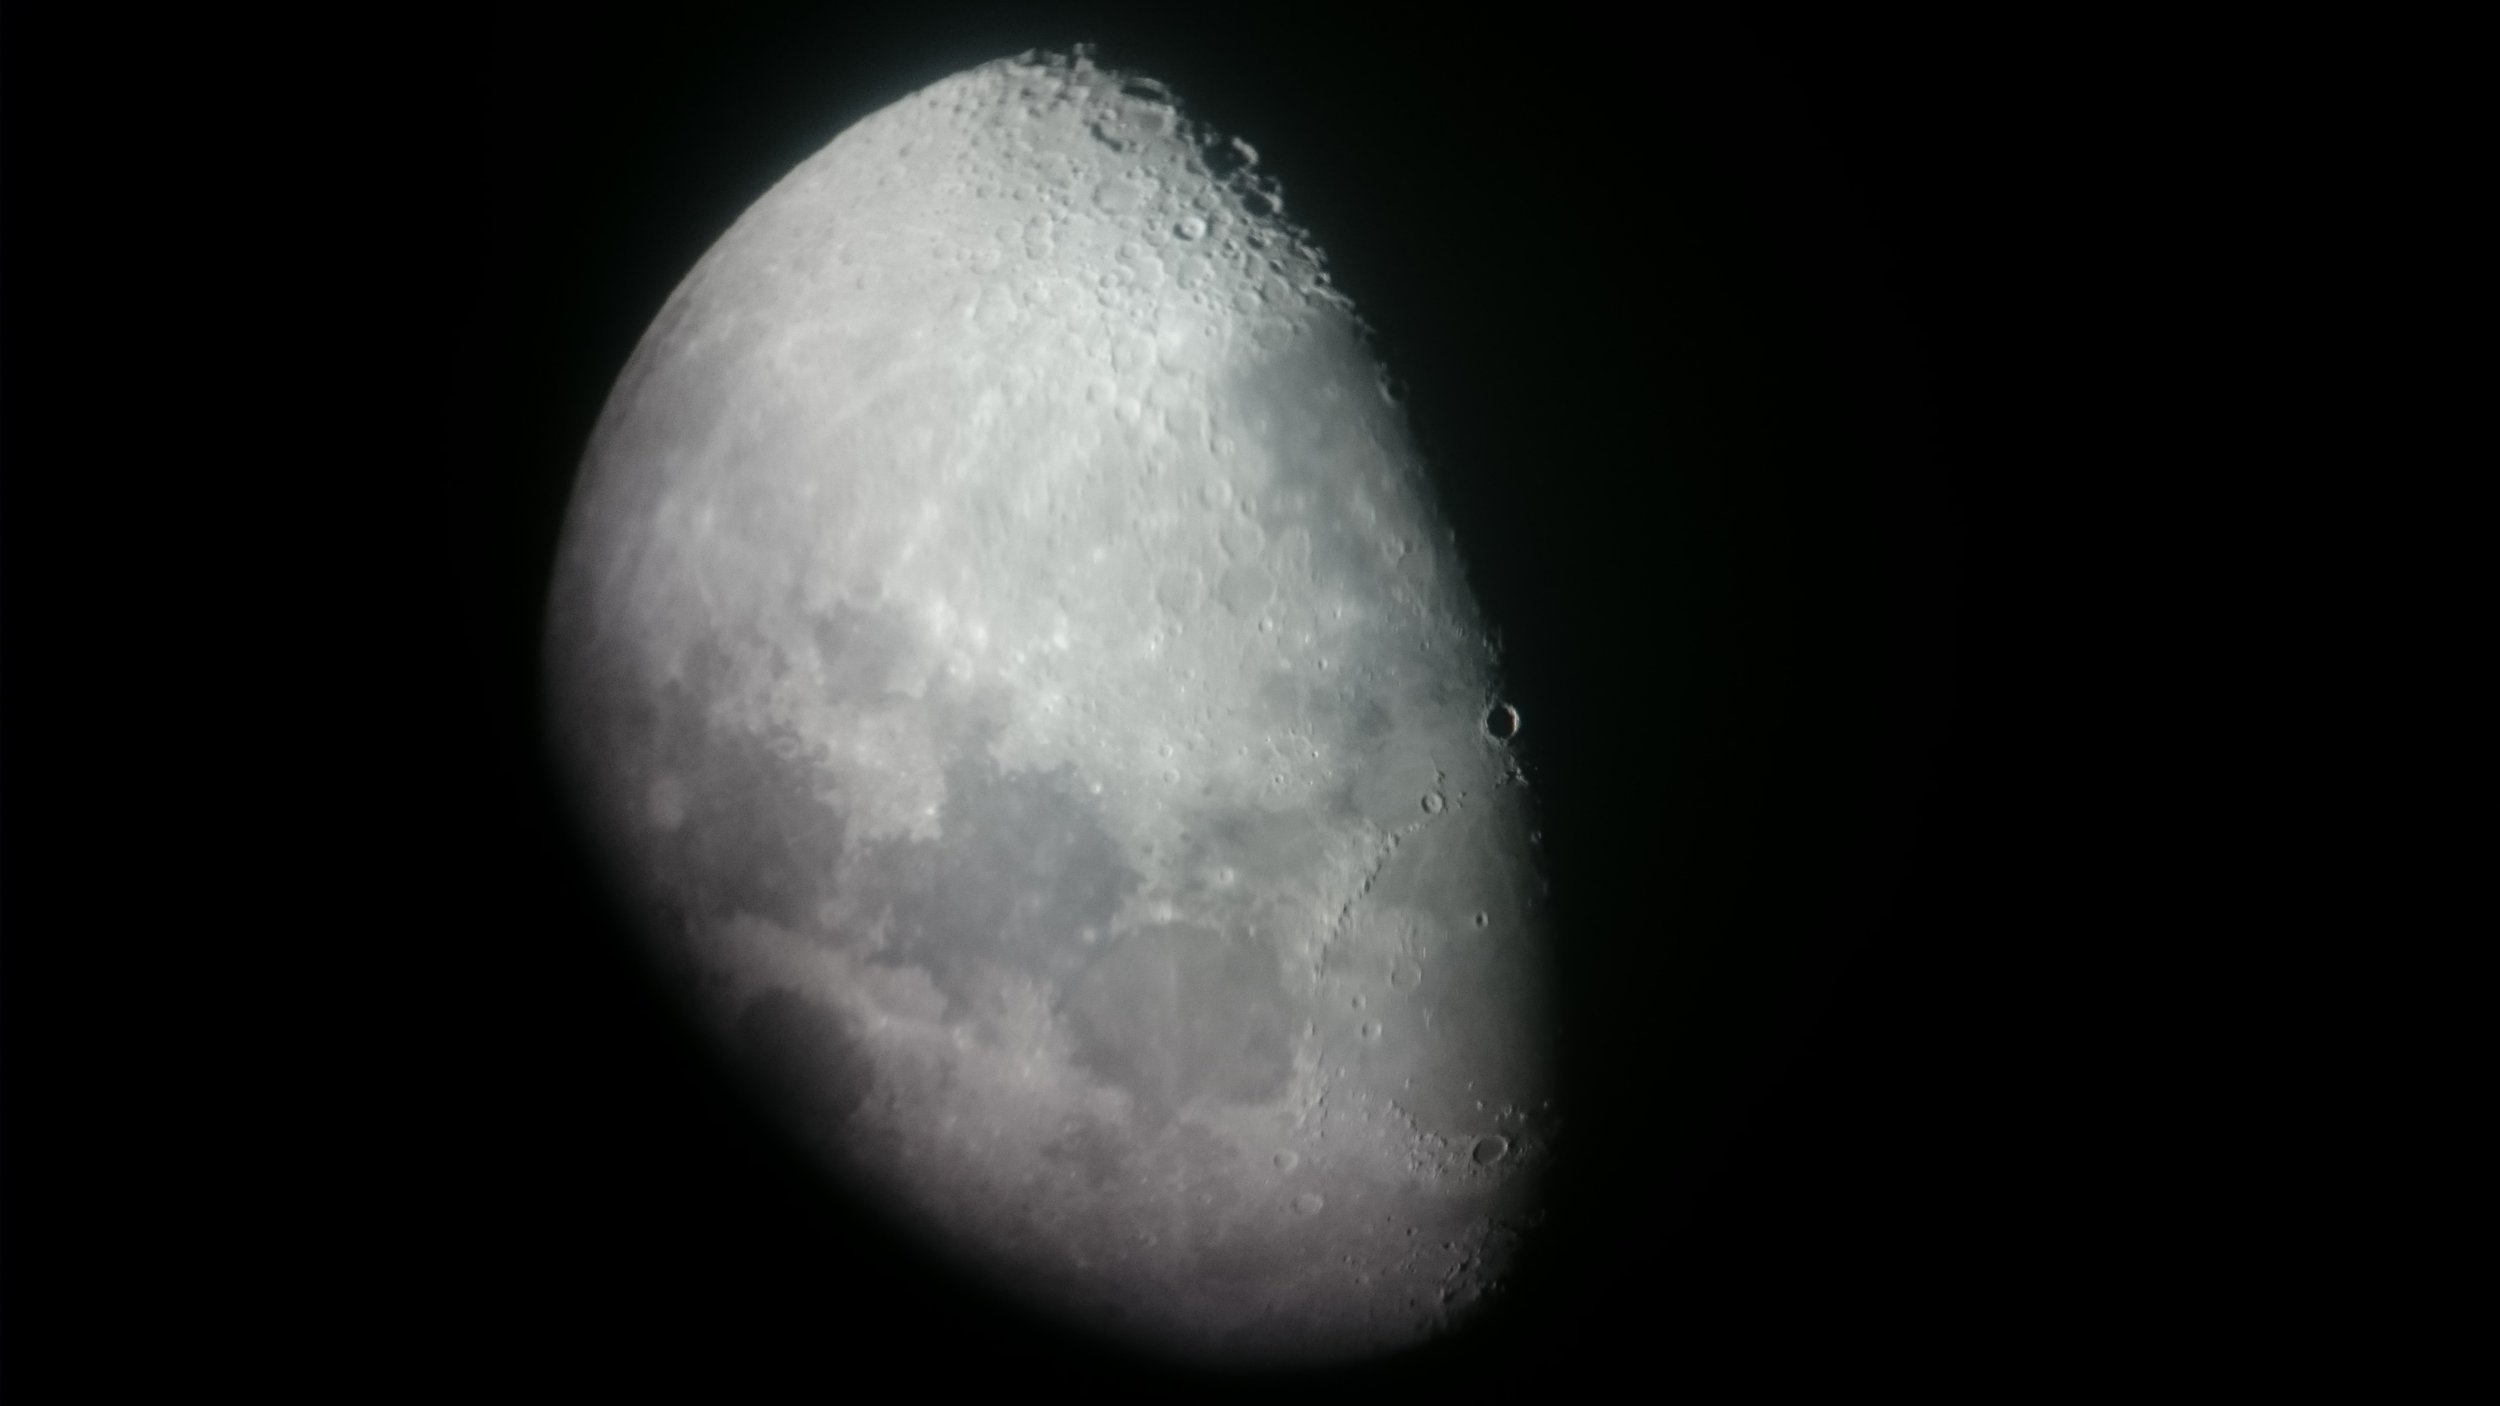 Moon photo through telescope.JPG